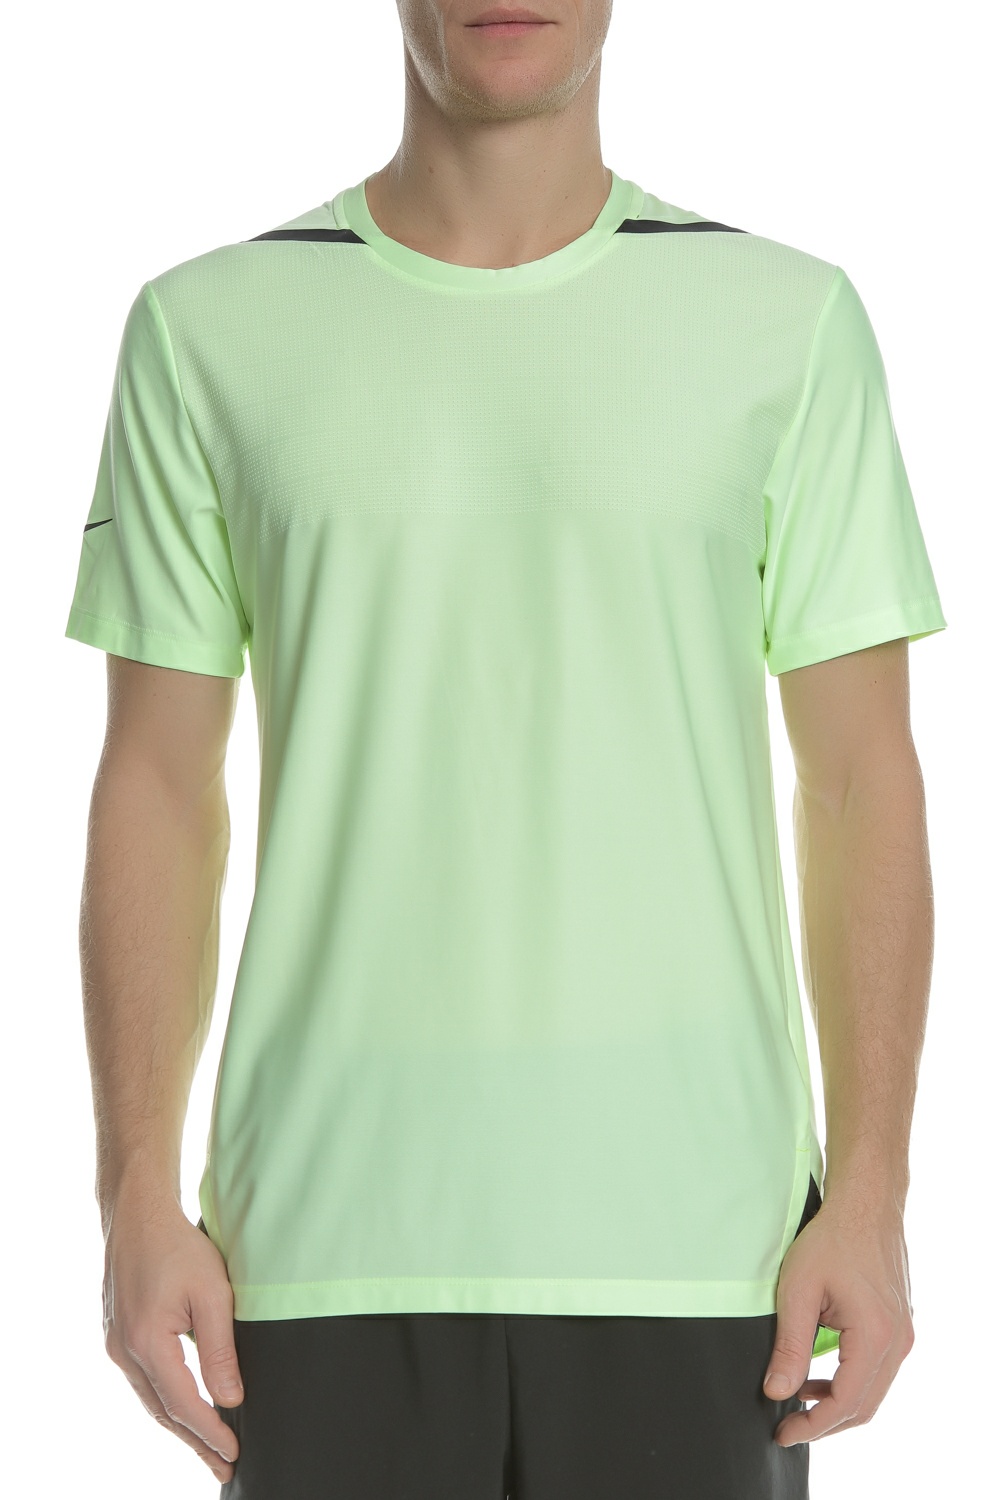 NIKE Ανδρική κοντομάνικη μπλούζα Nike Dri-FIT Breathe κίτρινη-λαχανί